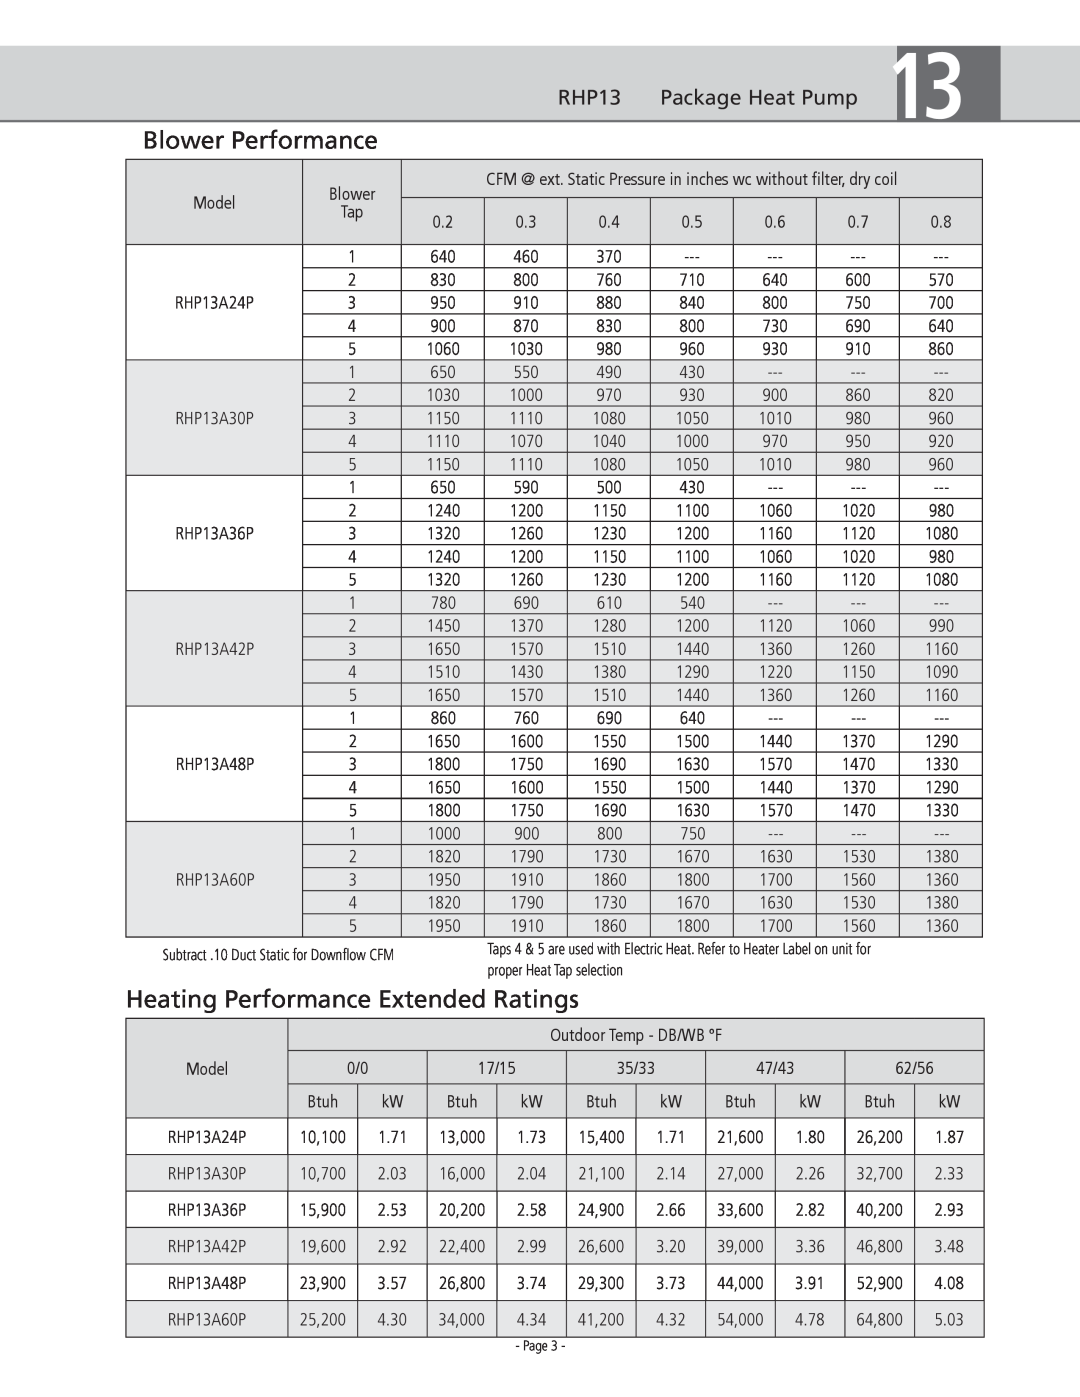 Ducane RHP13 warranty Blower Performance, Heating Performance Extended Ratings, Package Heat Pump 